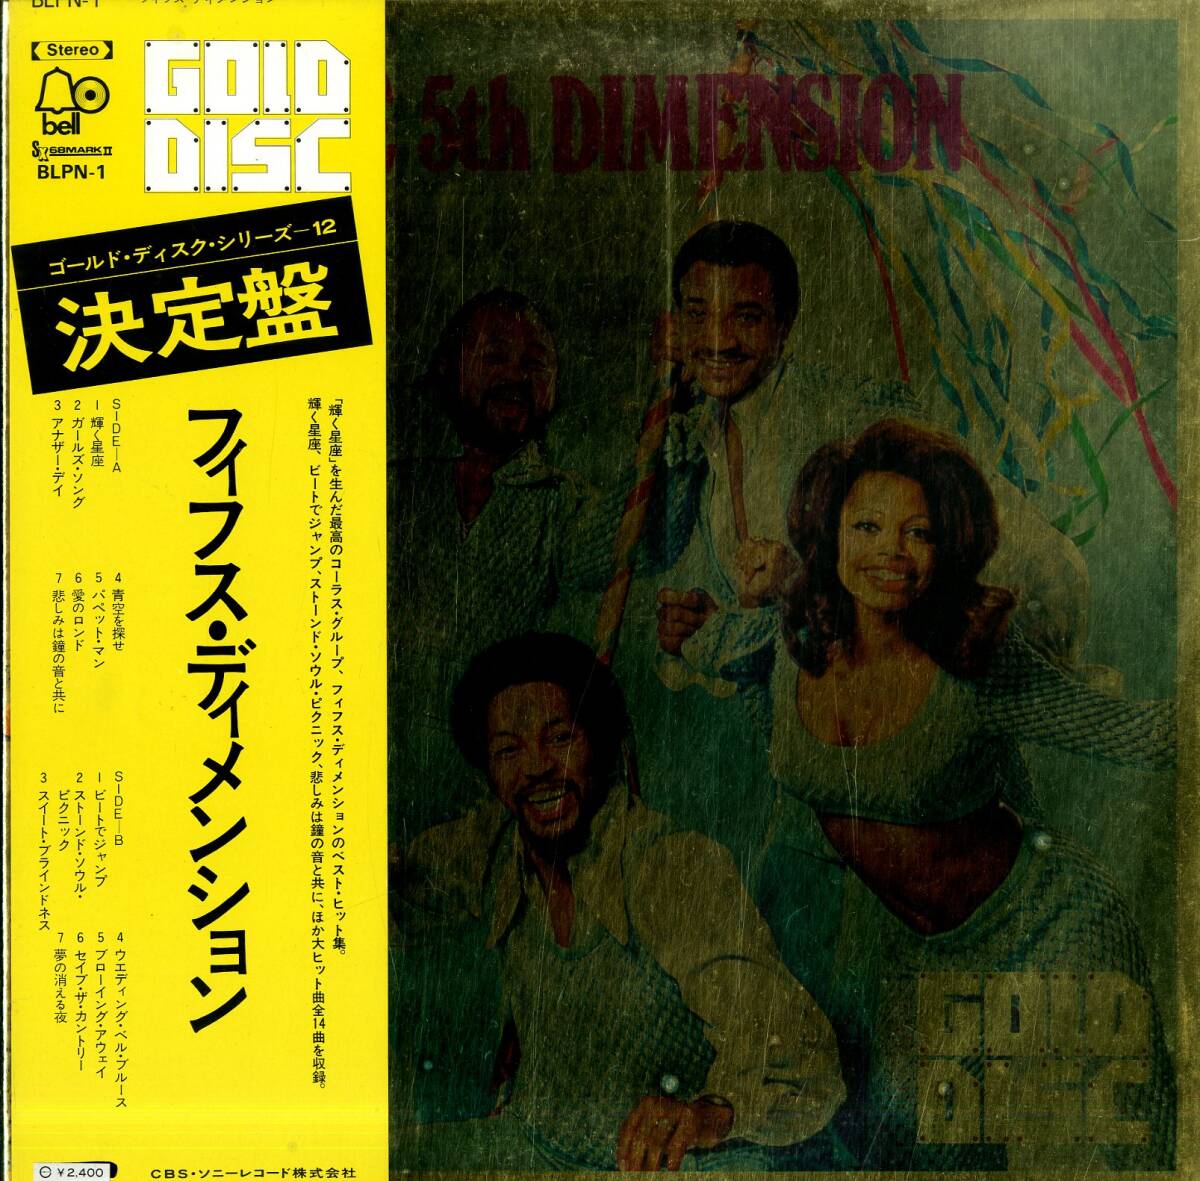 A00562213/LP/フィフス・ディメンション「The Fifth Dimension Gold Disc ゴールド・ディスク・シリーズ-12 決定盤 (BLPN-1・ソウル・SOUの画像1